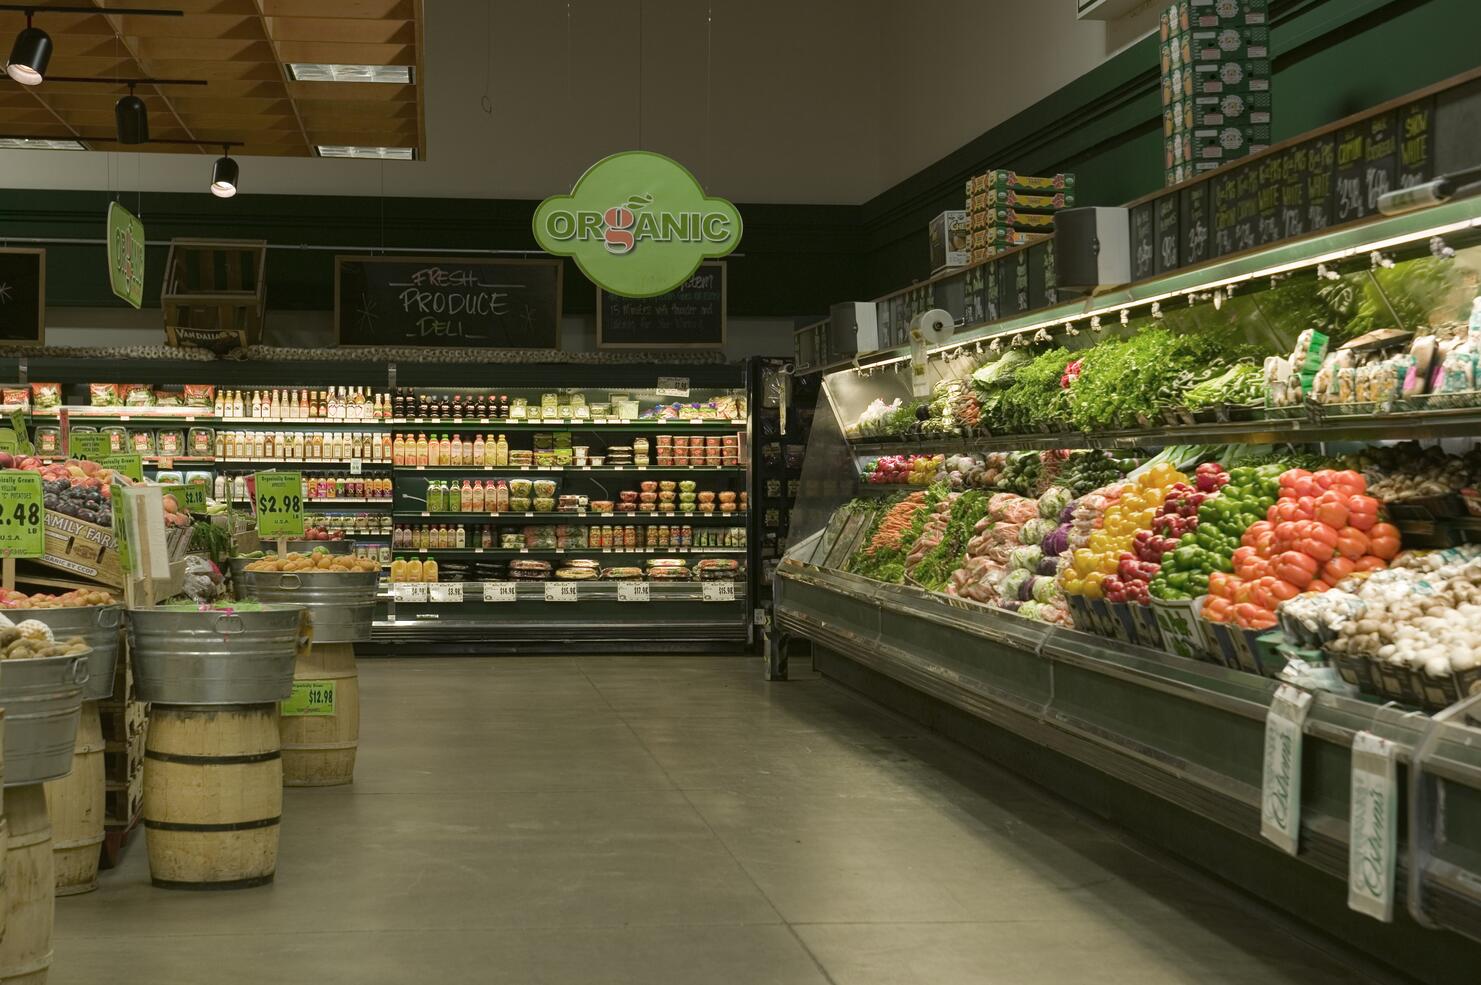 Organic produce aisle in supermarket